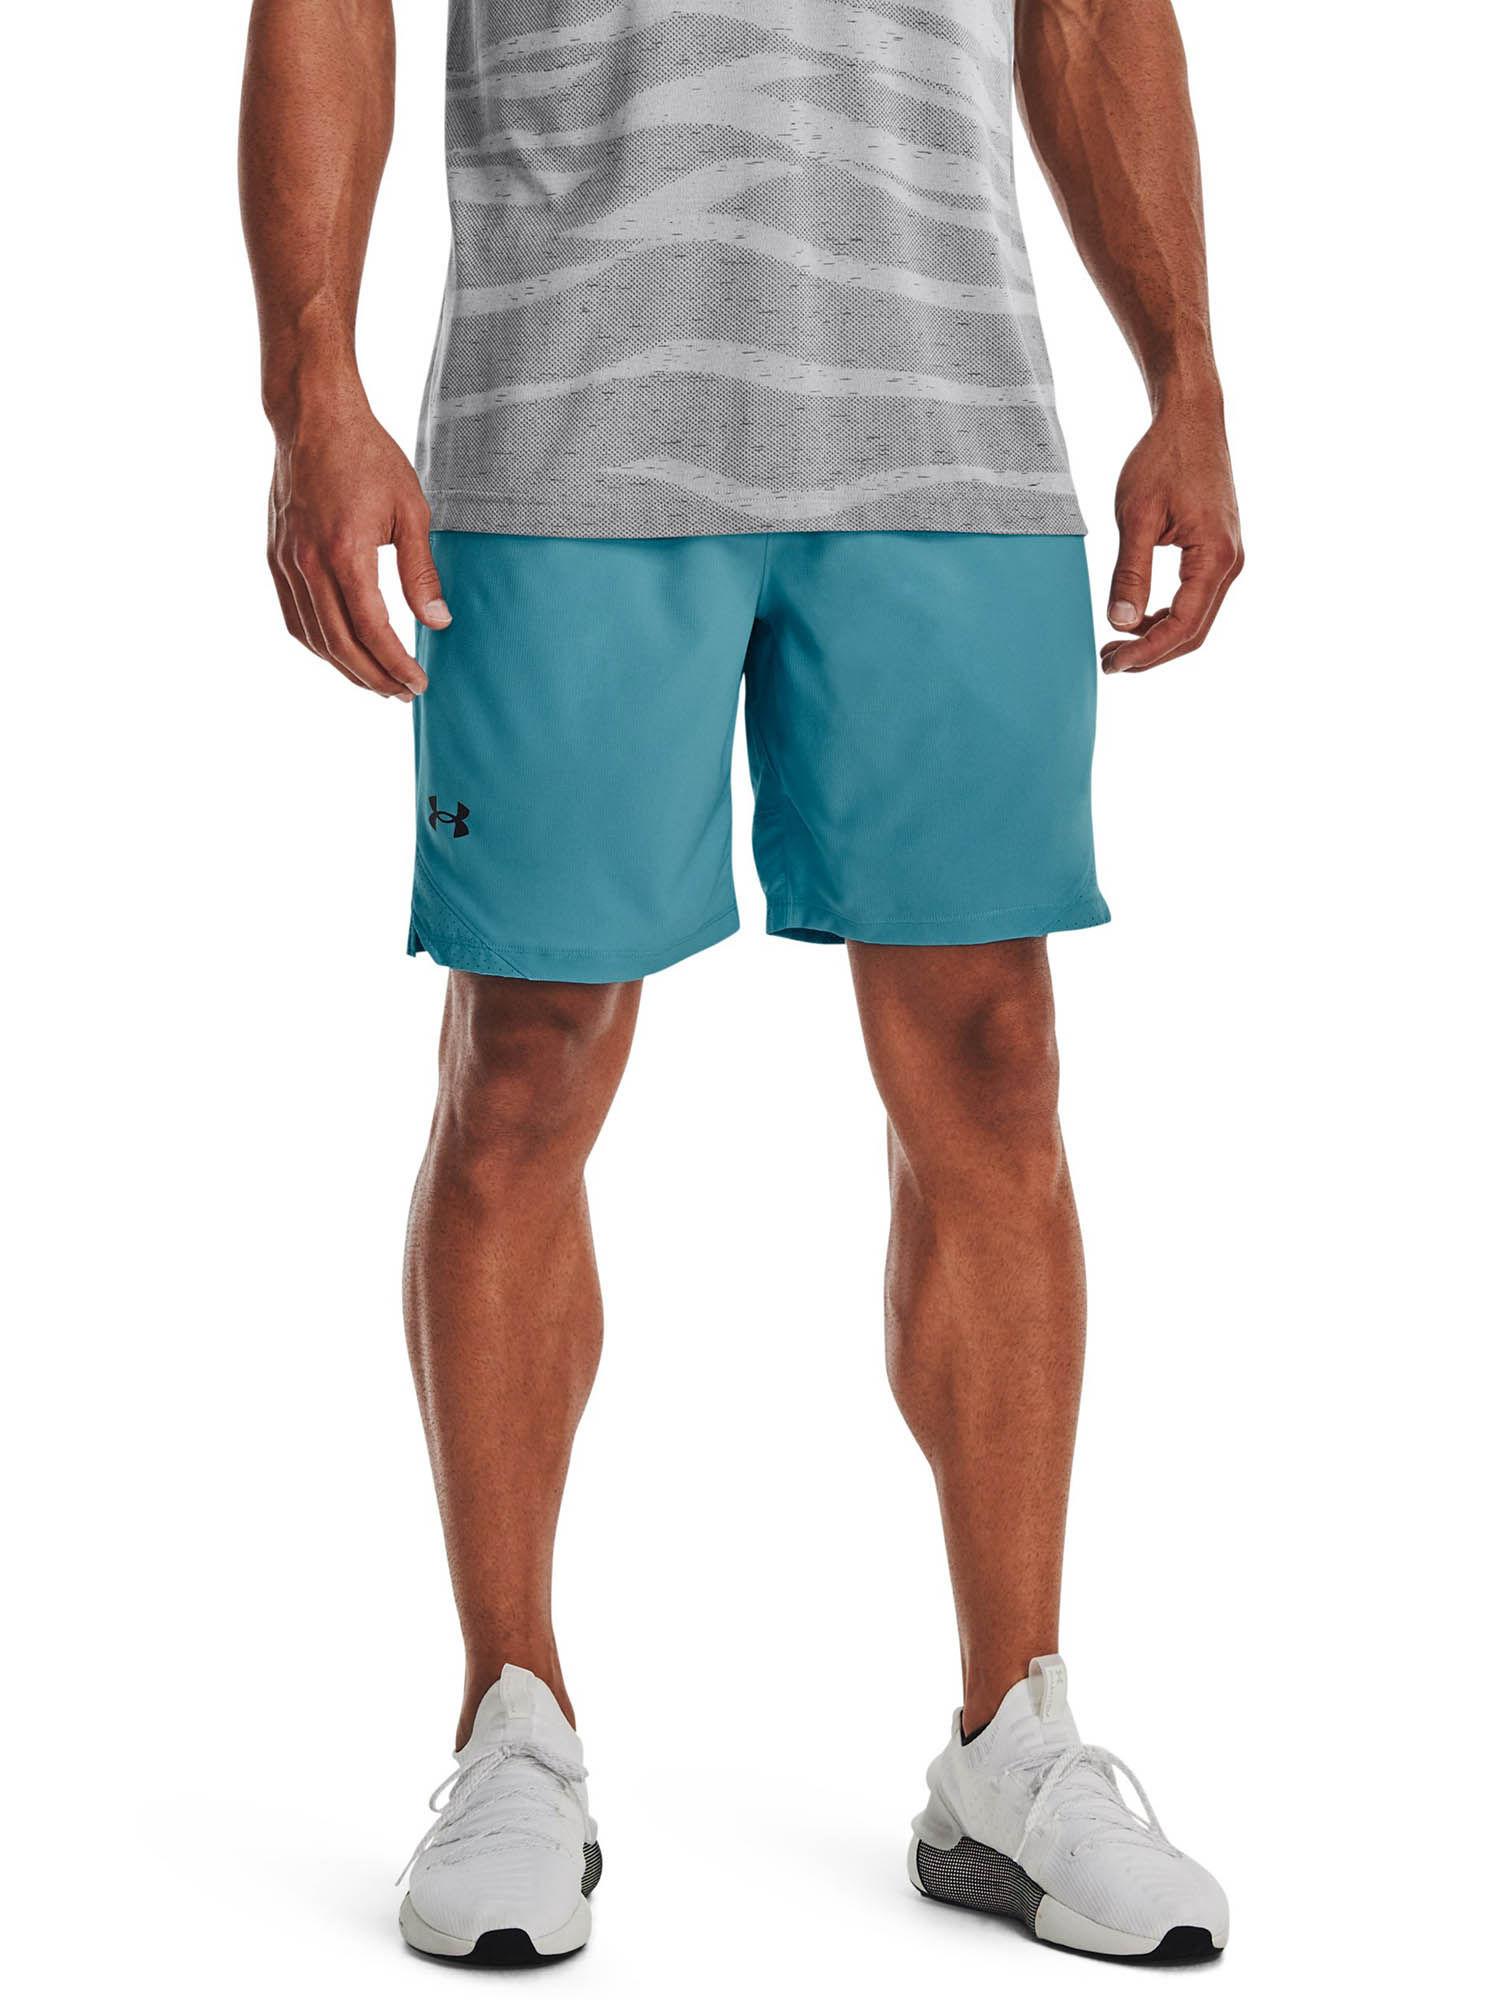 vanish woven shorts